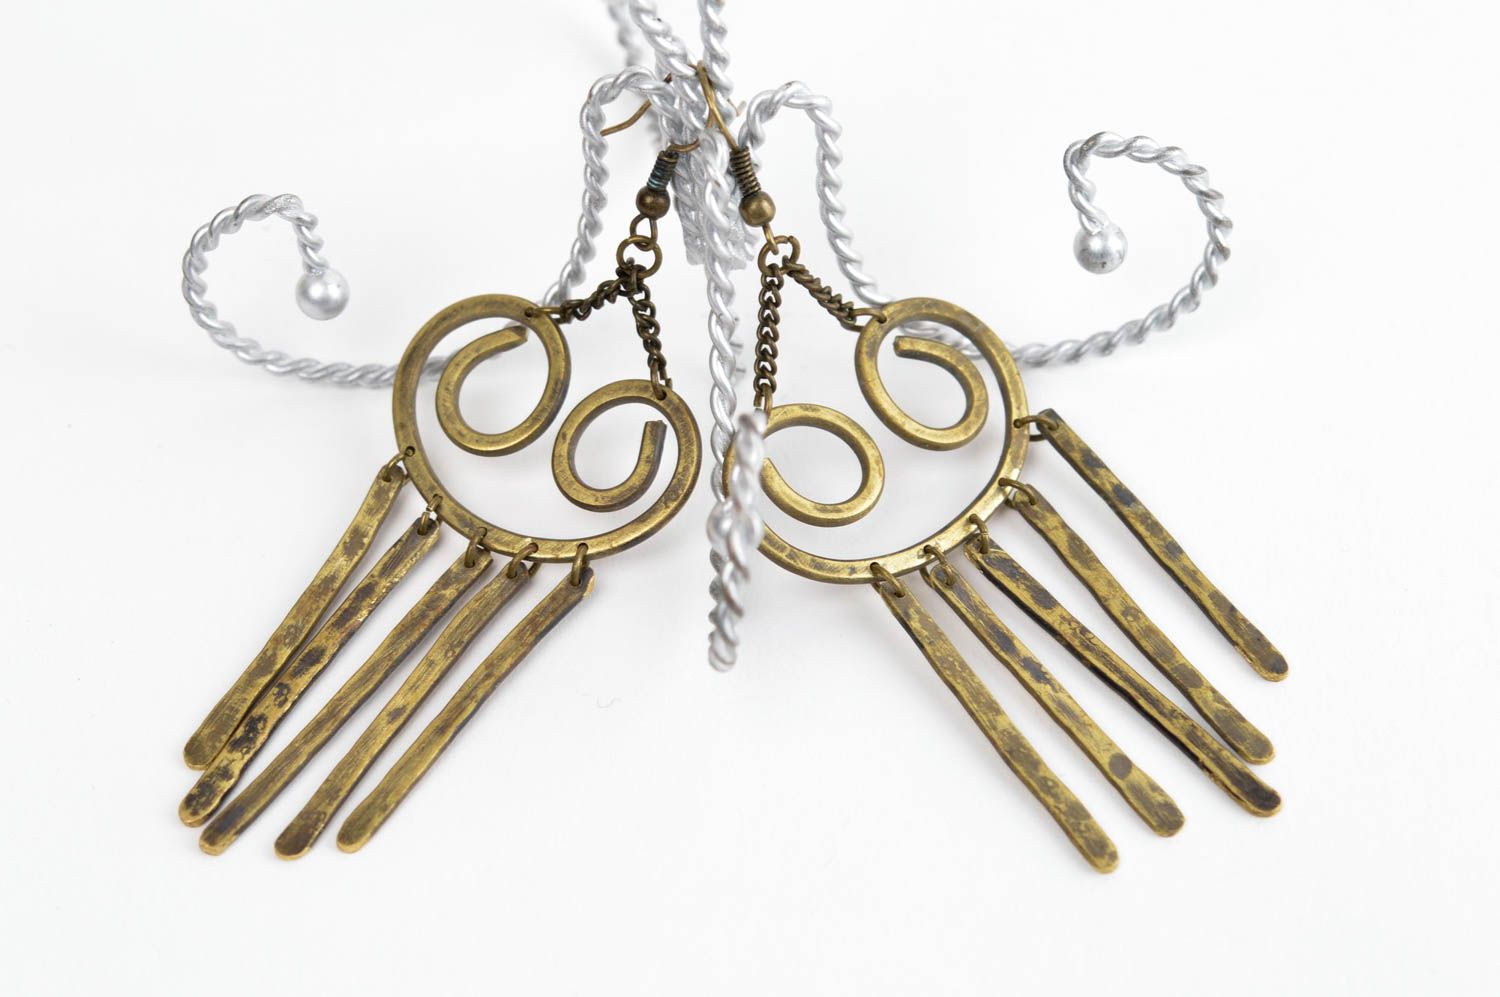 Stylish handmade metal earrings costume jewelry designs metal craft gift ideas photo 1